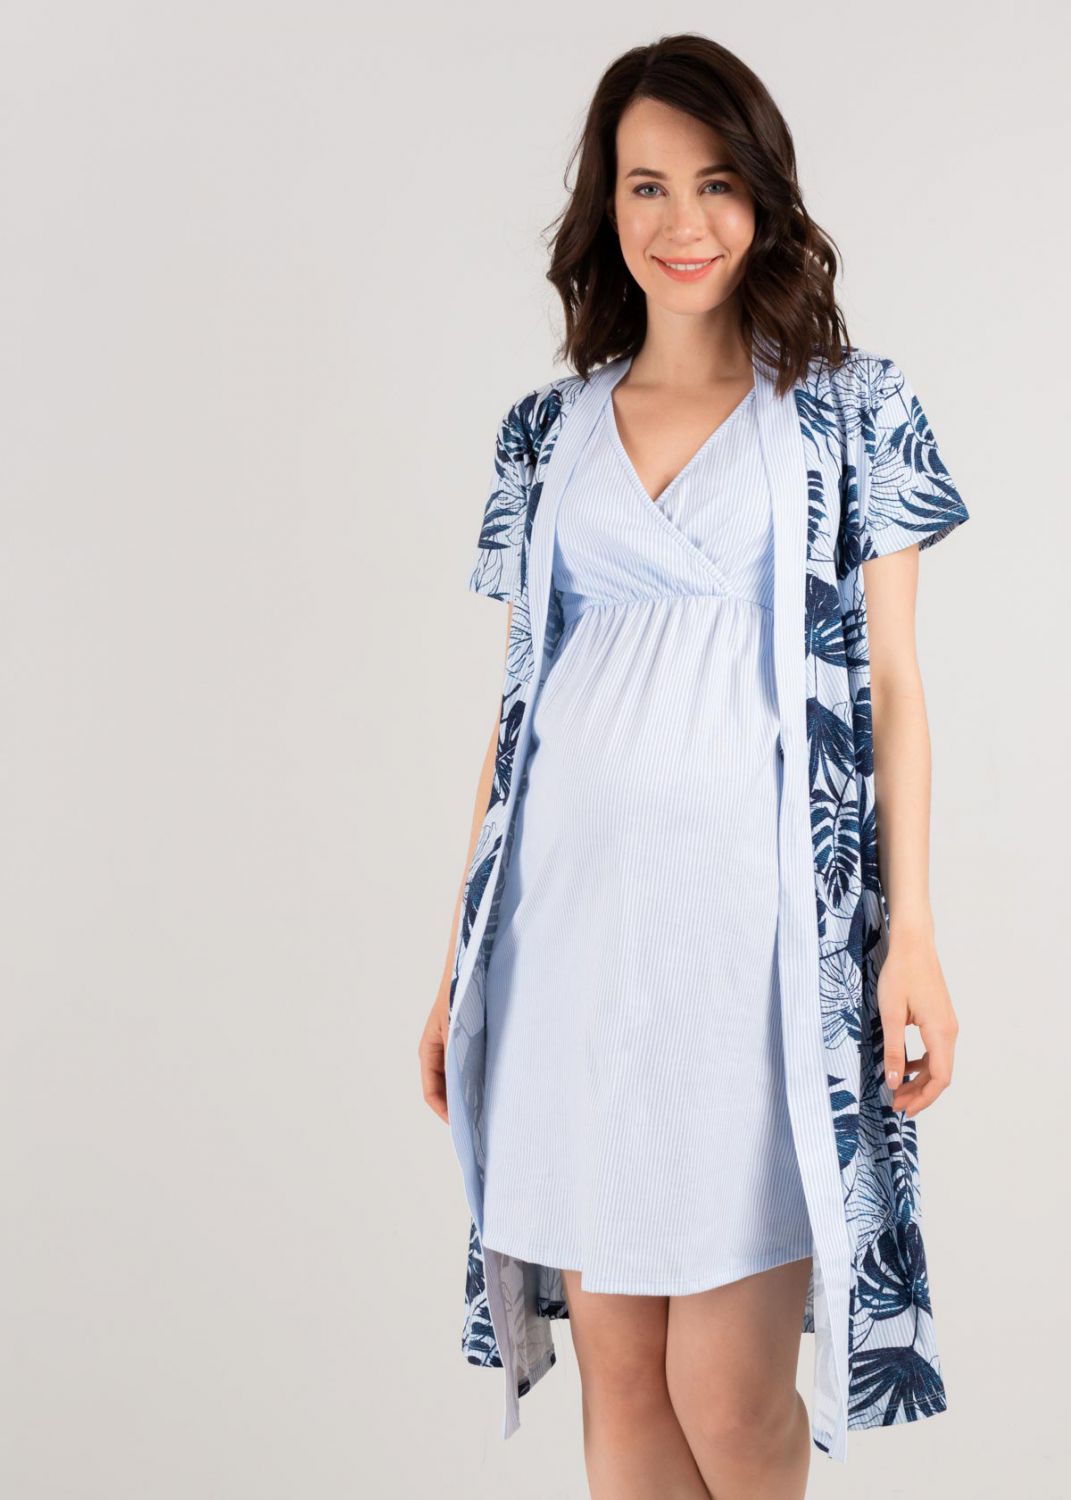 Maternity Robe Pajamas Nightgown Lace V Neck Breastfeeding Dress Nursing  Nightdress Pregnant Women Nightwear Pregnancy Sleepwear